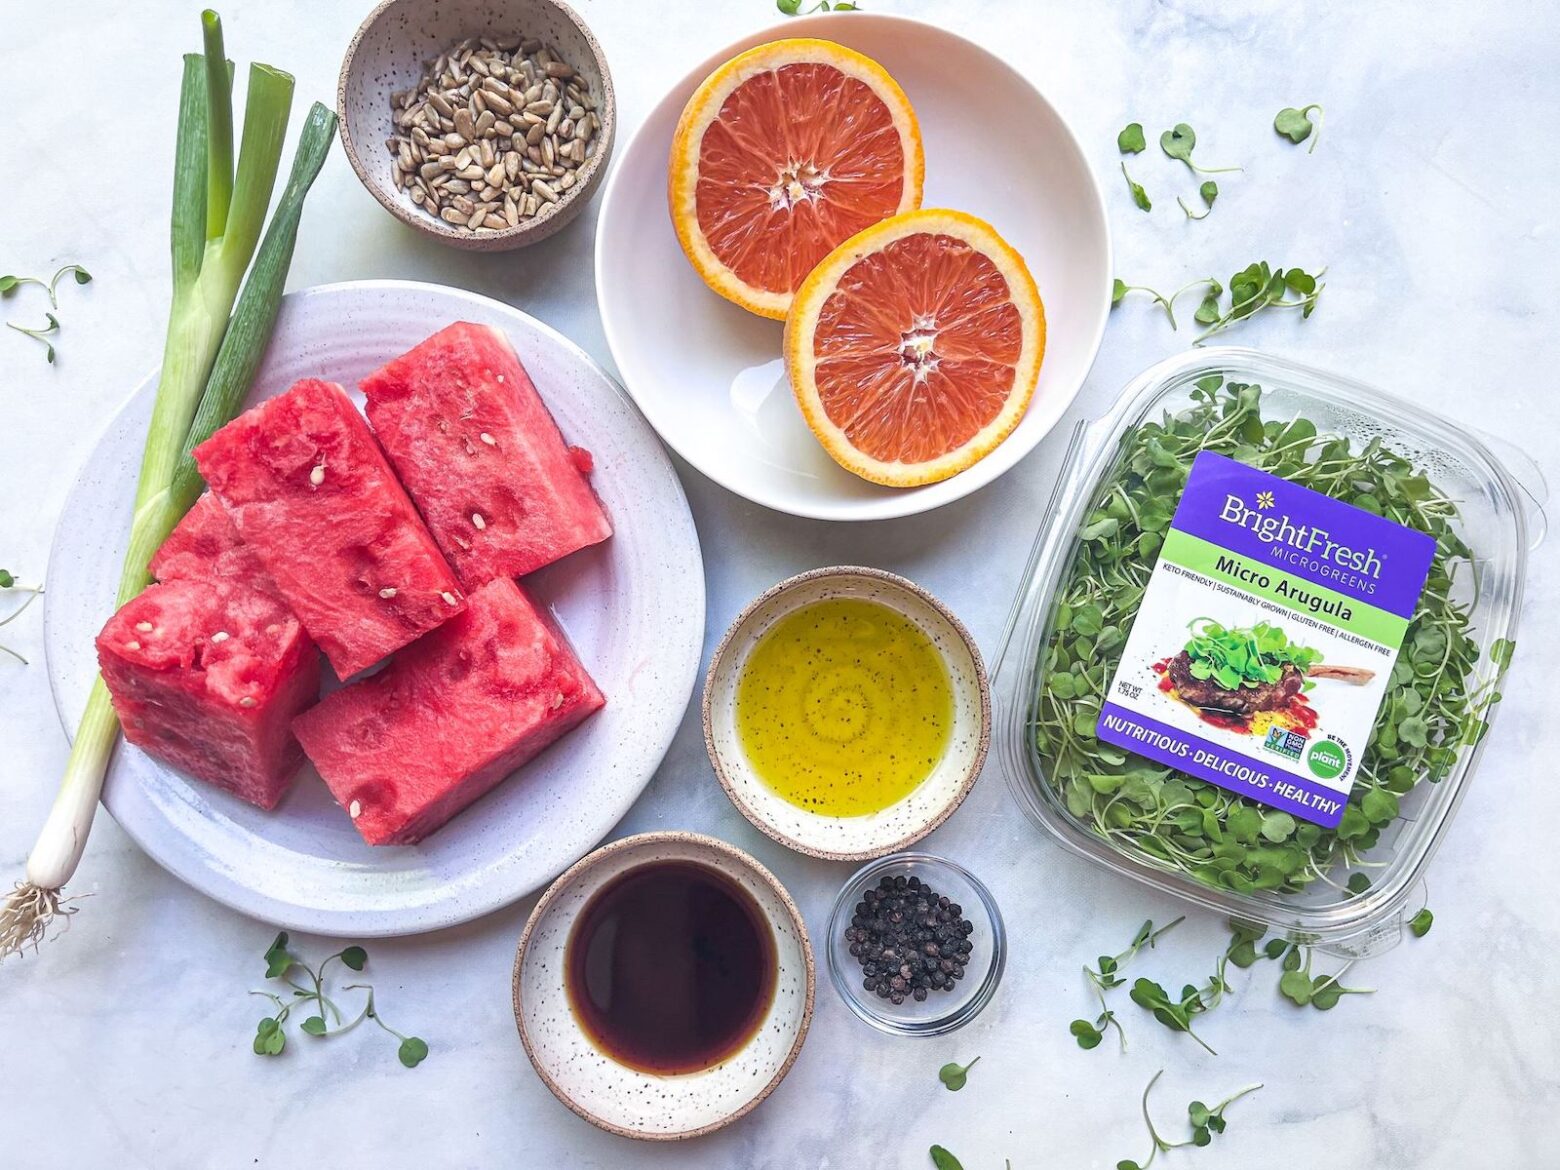 watermelon salad with BrightFresh microgreens ingredients